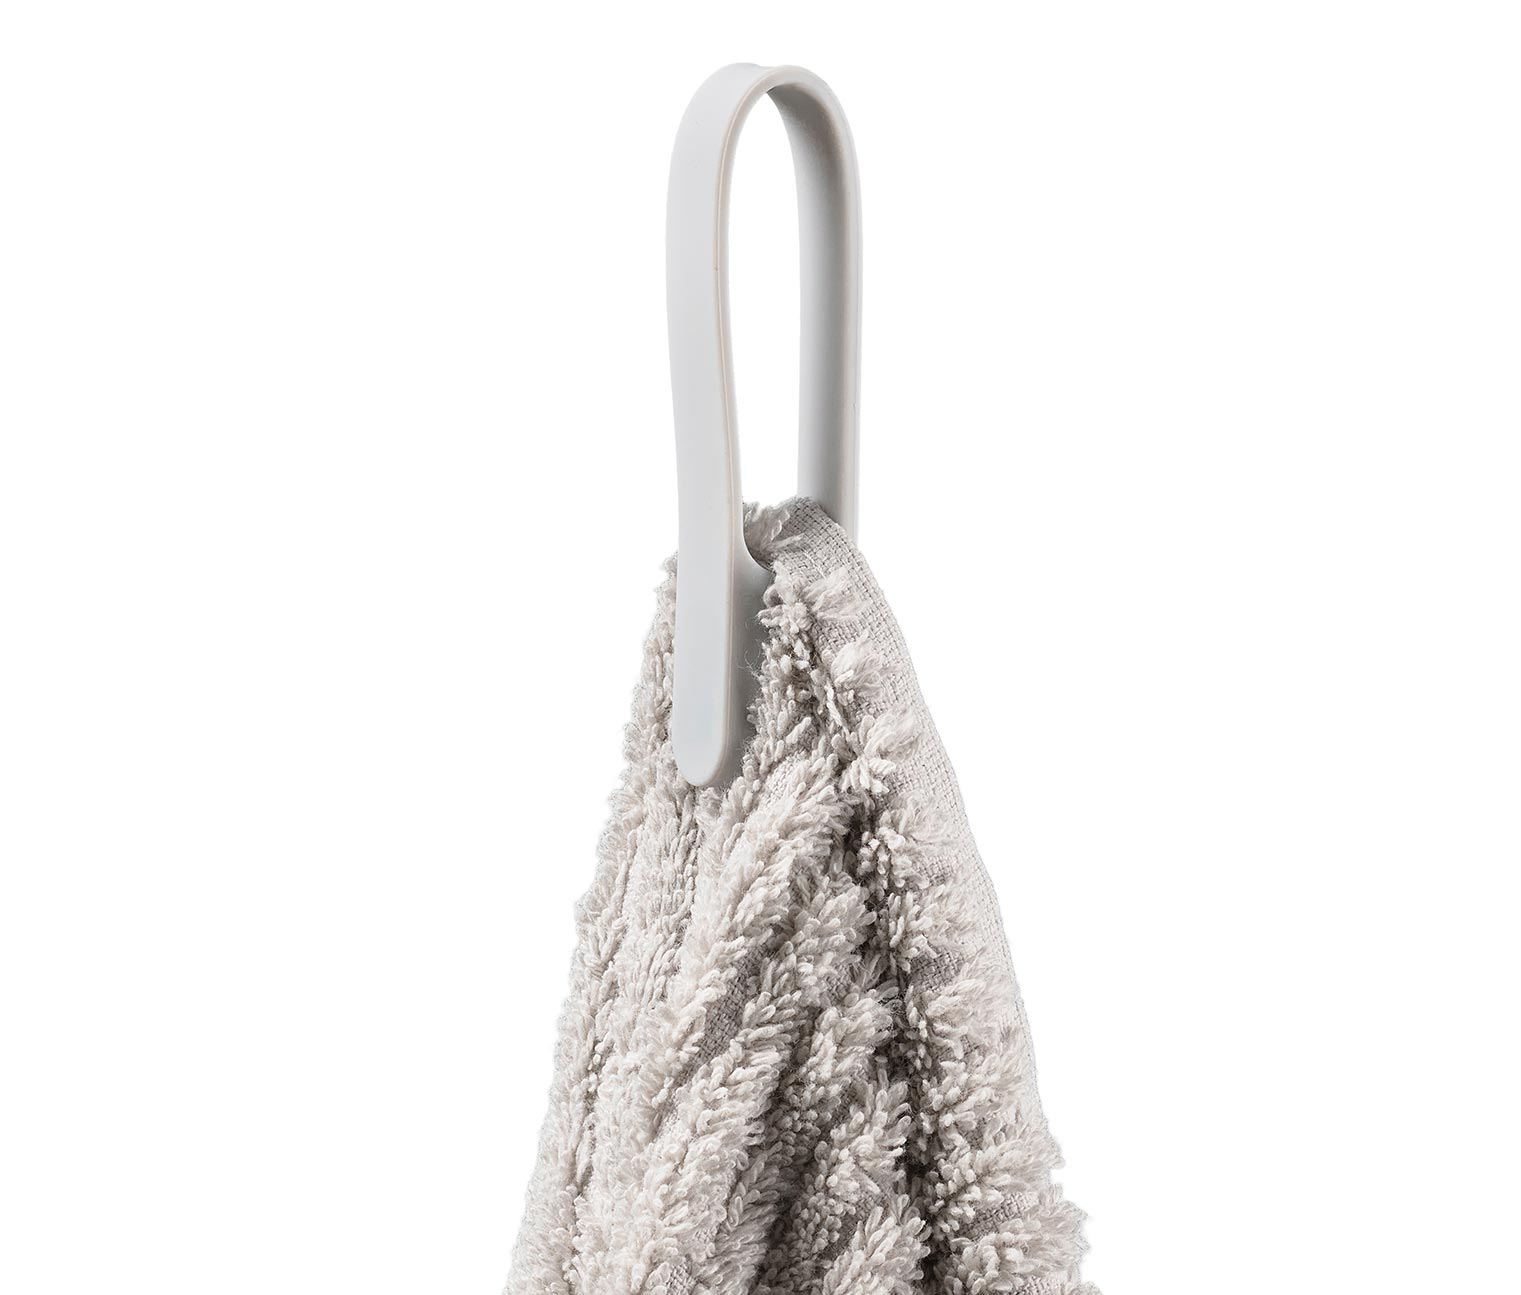 Zone Denmark LOOP Towel holder with magnet, eucalyptus green - 2 pcs